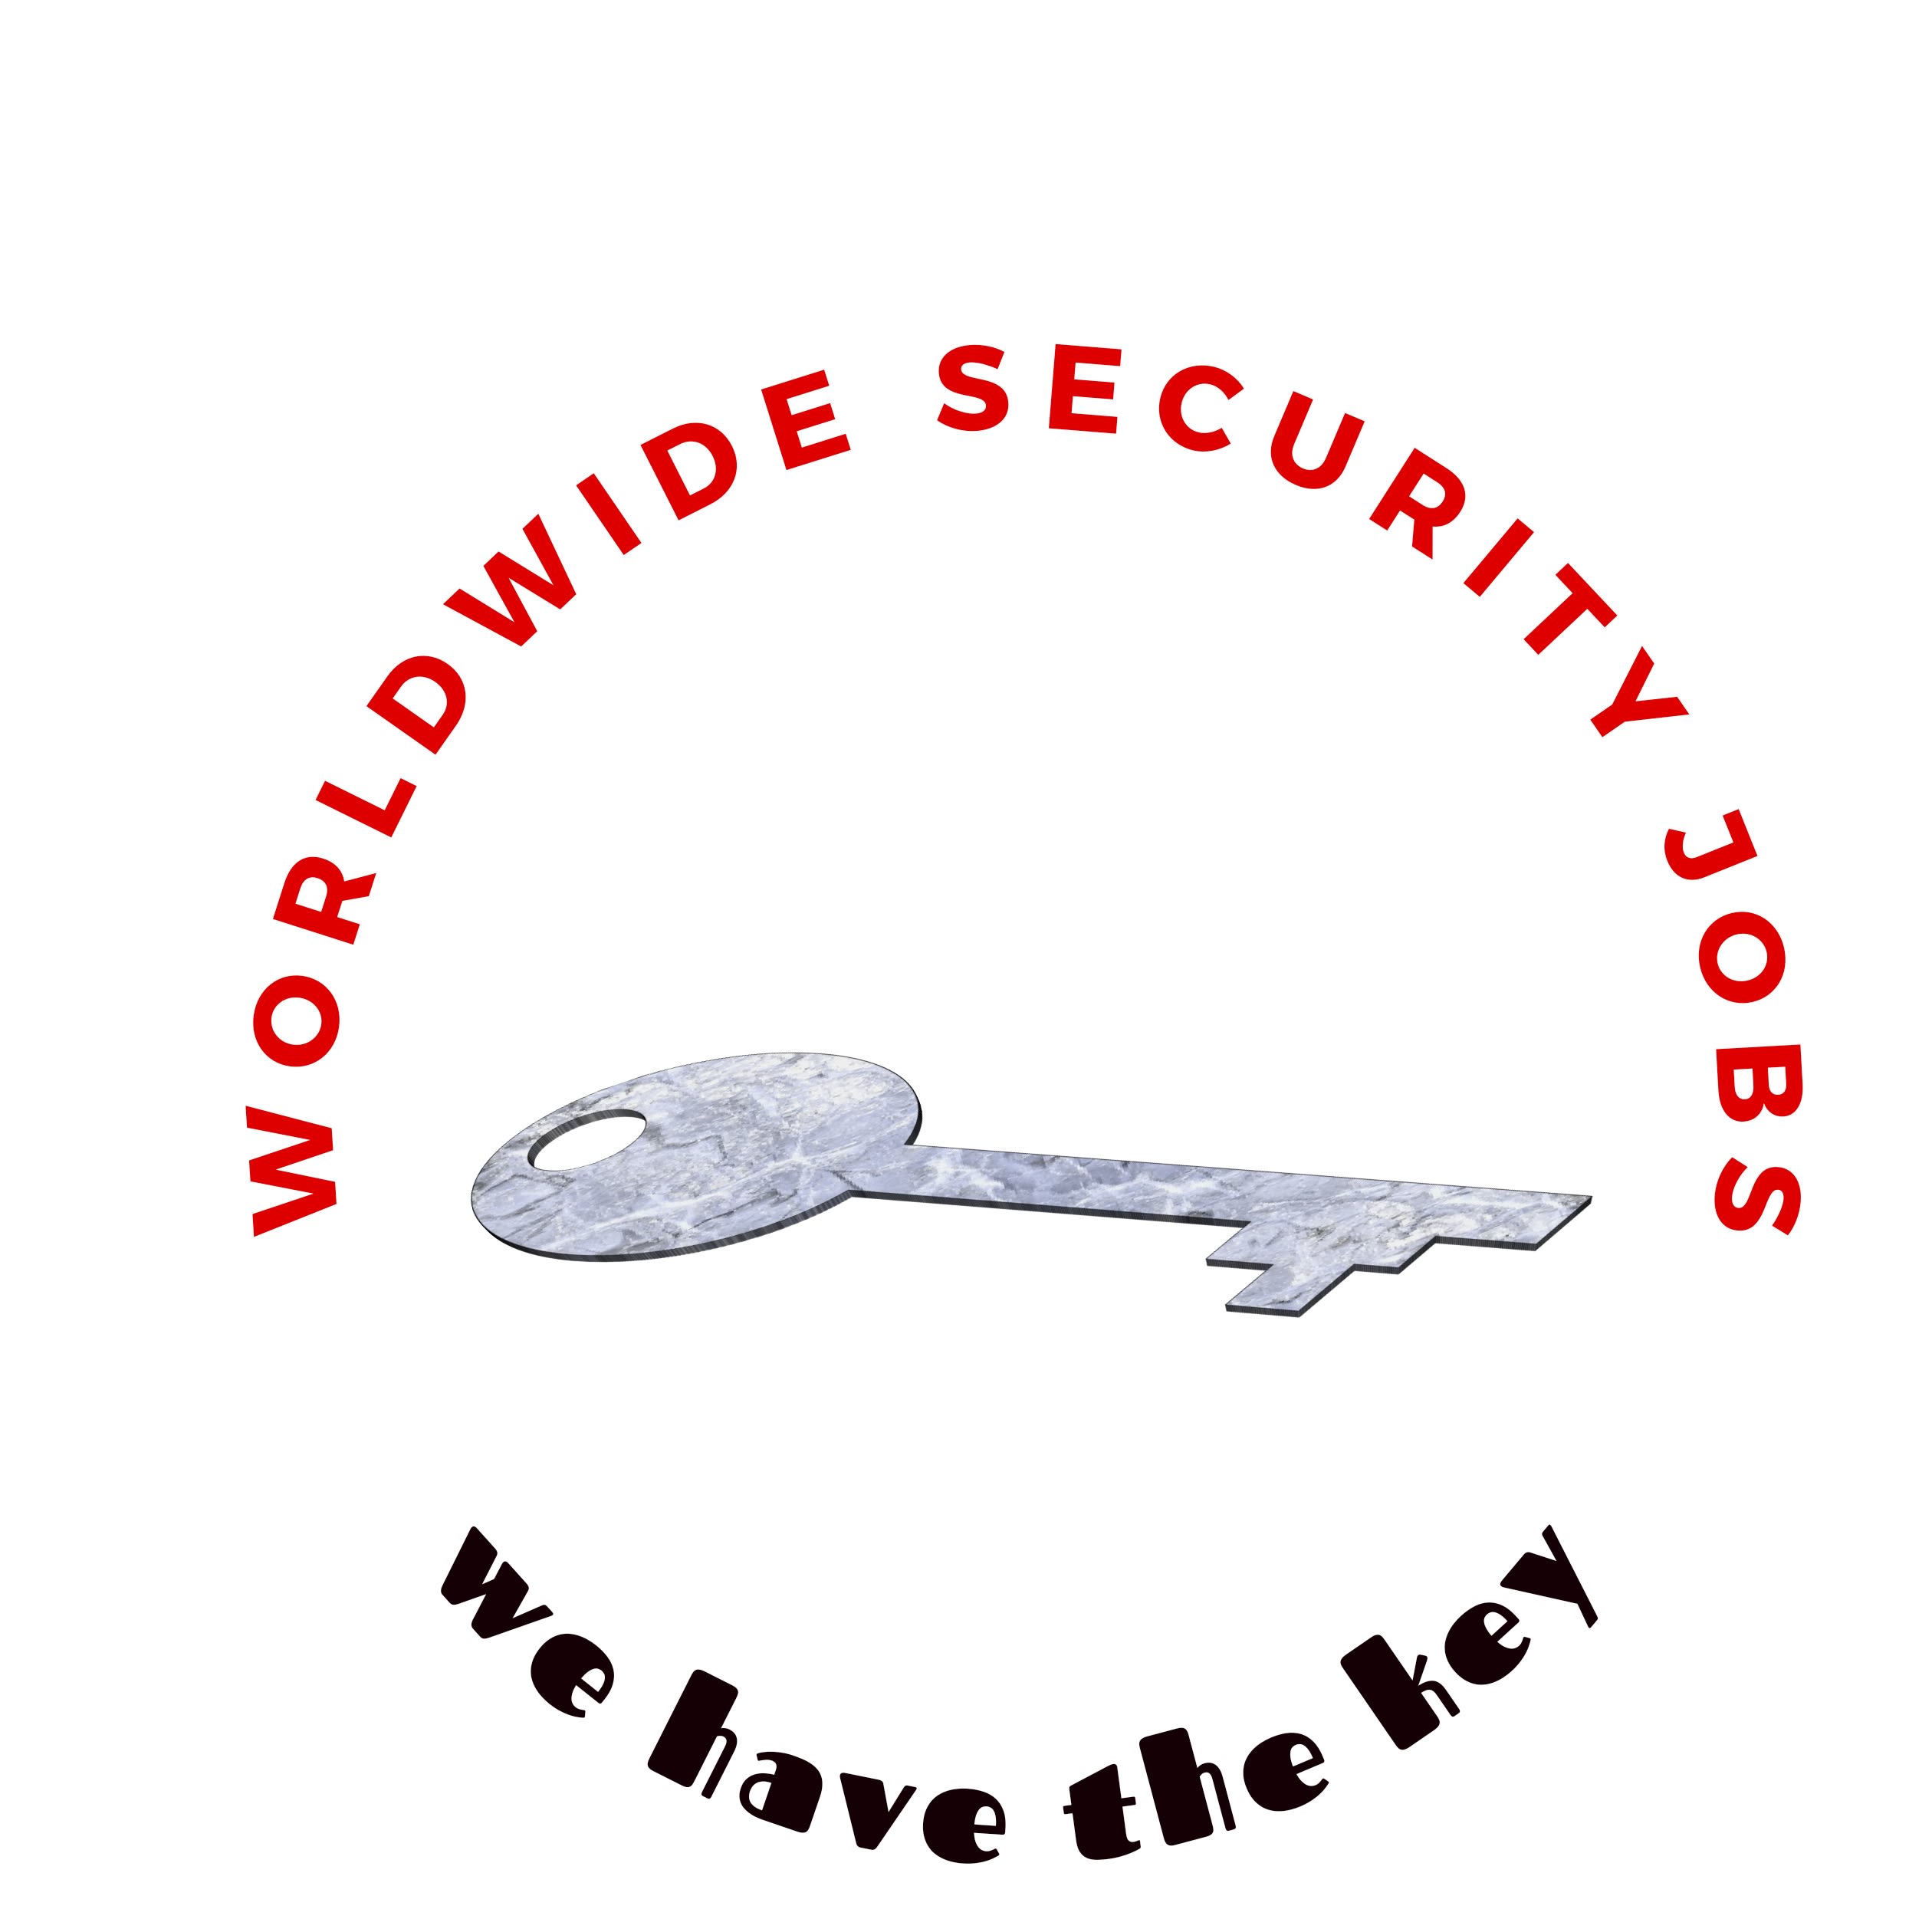 Worldwide Security Jobs